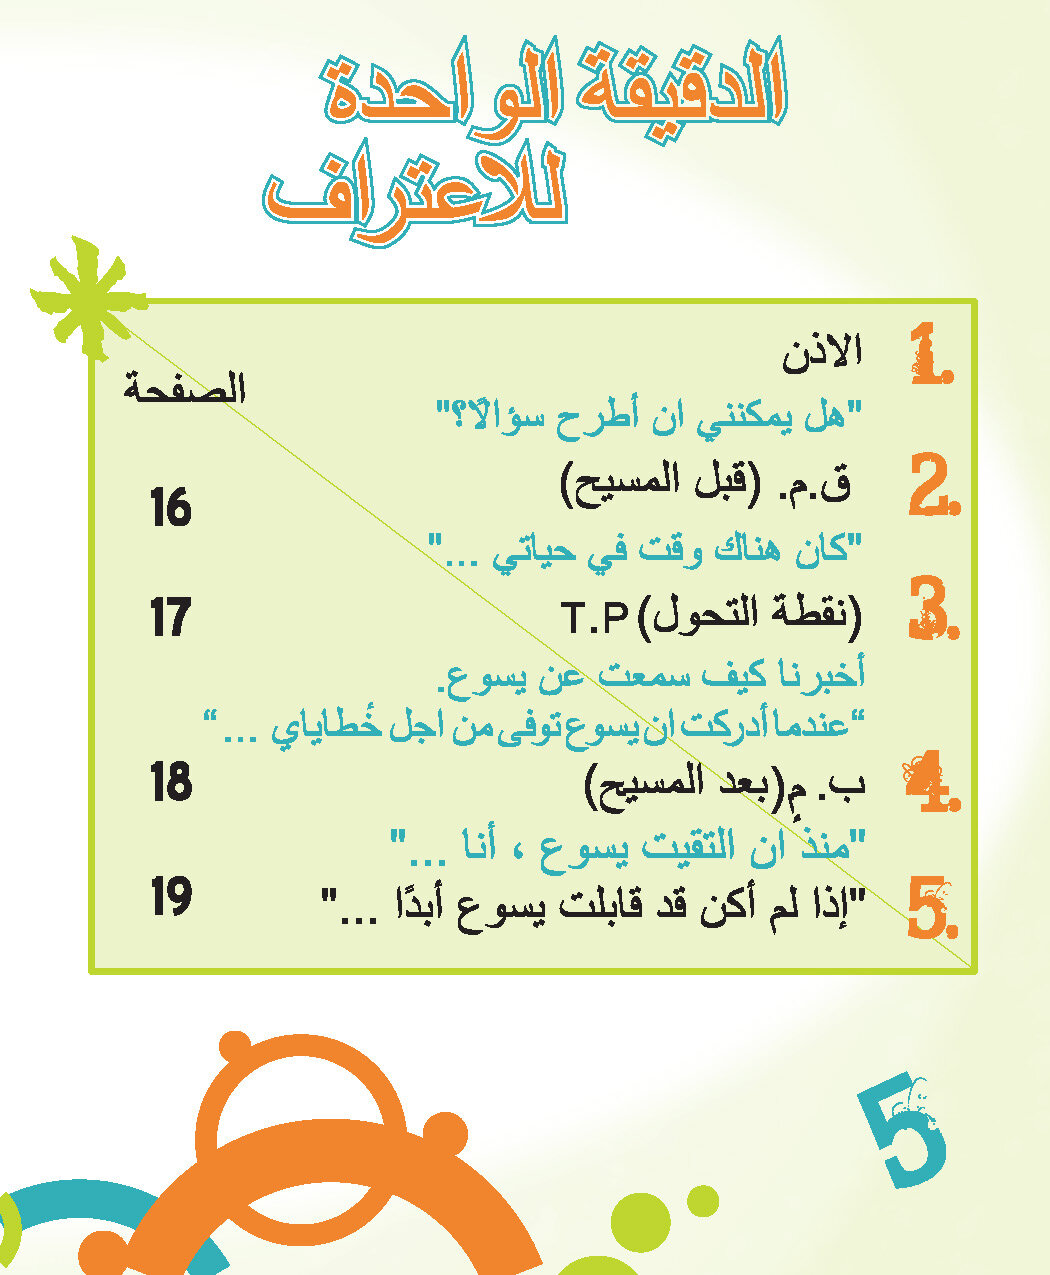 Arabic_Zubi_CDR-based_Page_05.jpg